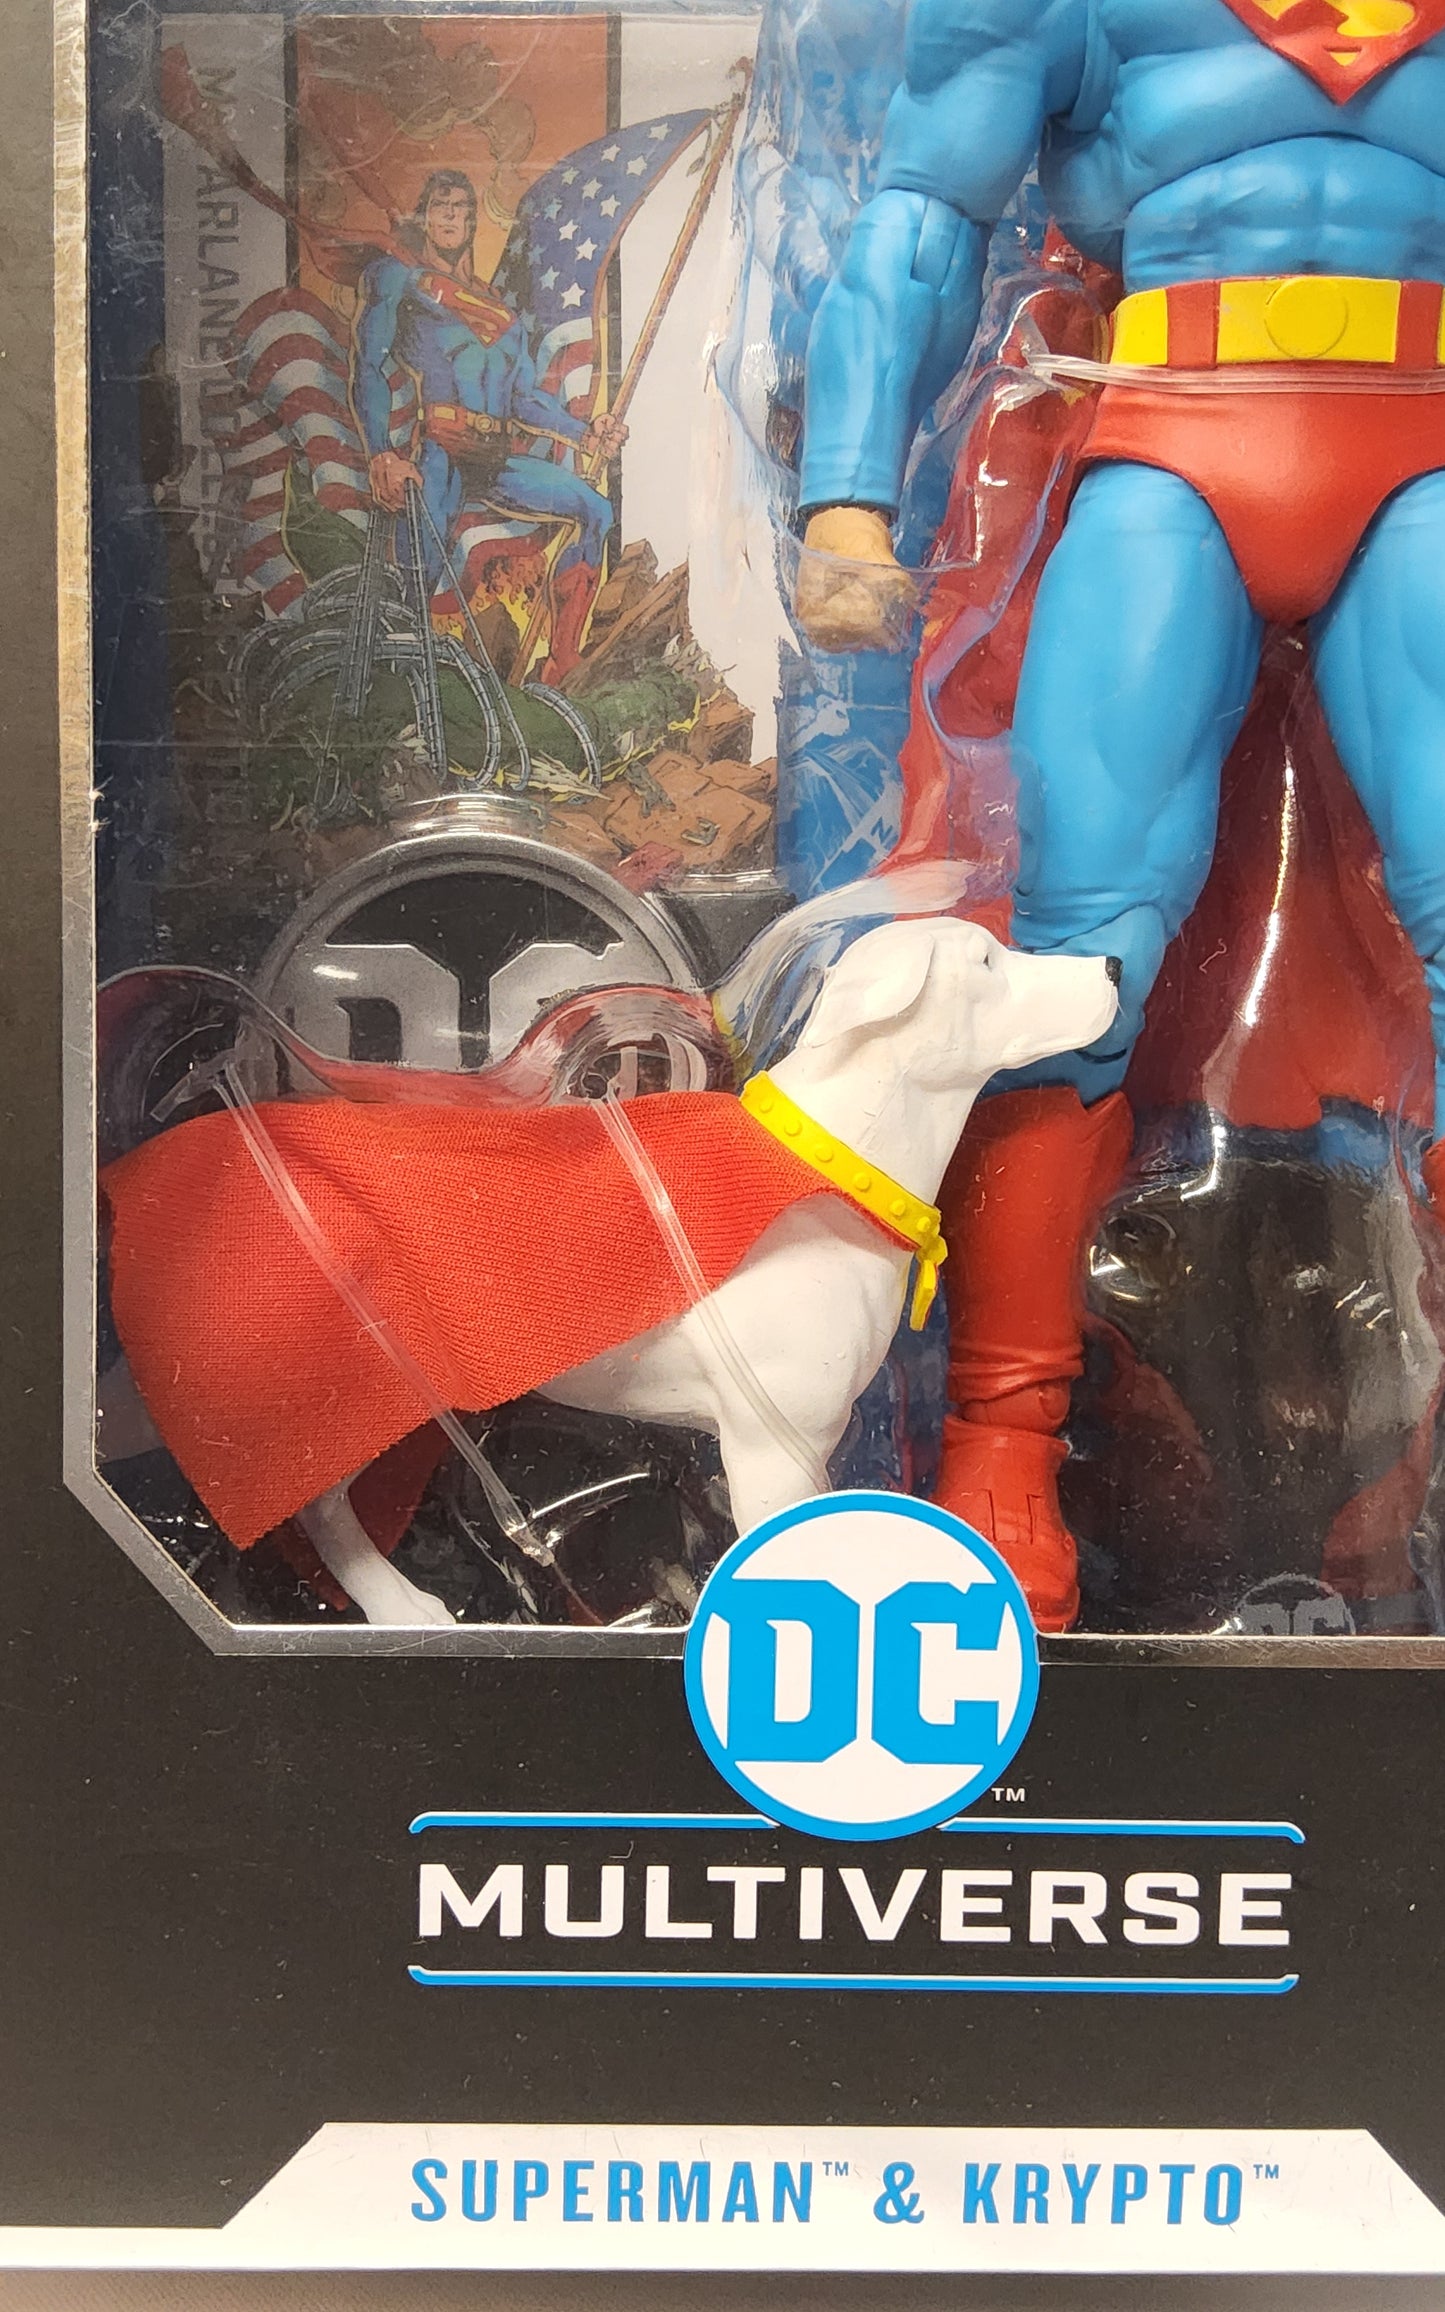 "Superman & Krypto McFarlane Collector Edition #9 - DC Multiverse"